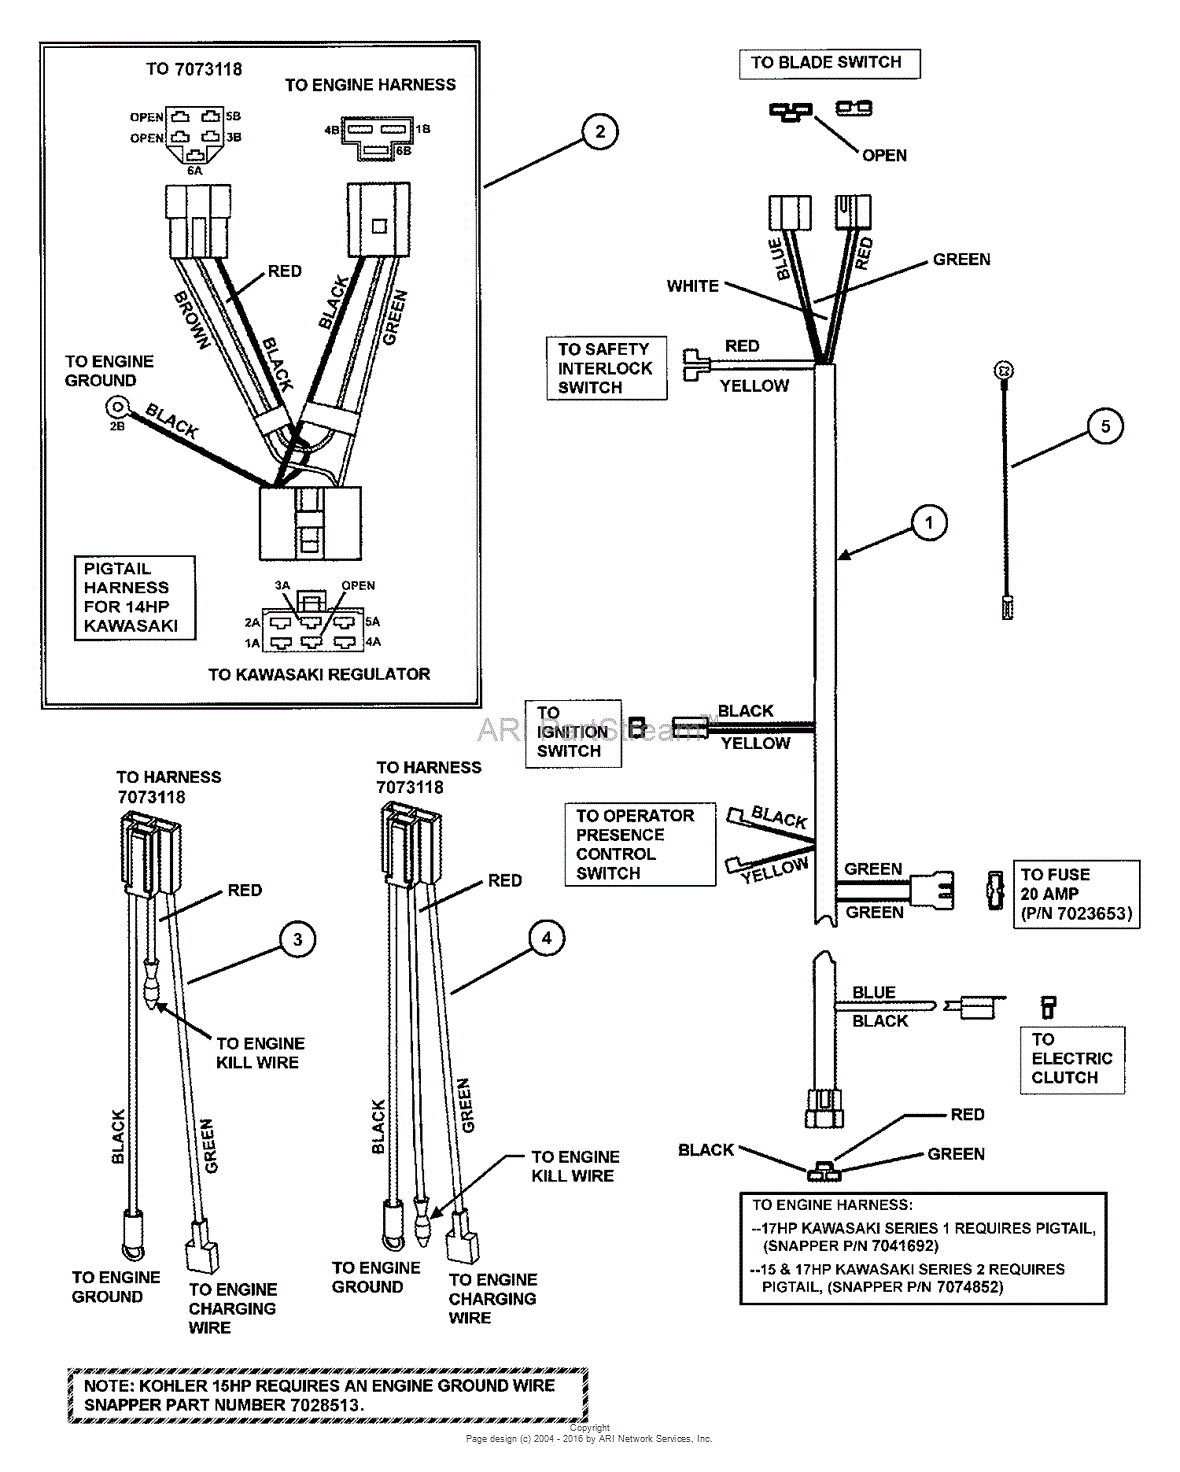 Kohler Ignition Switch Wiring Diagram